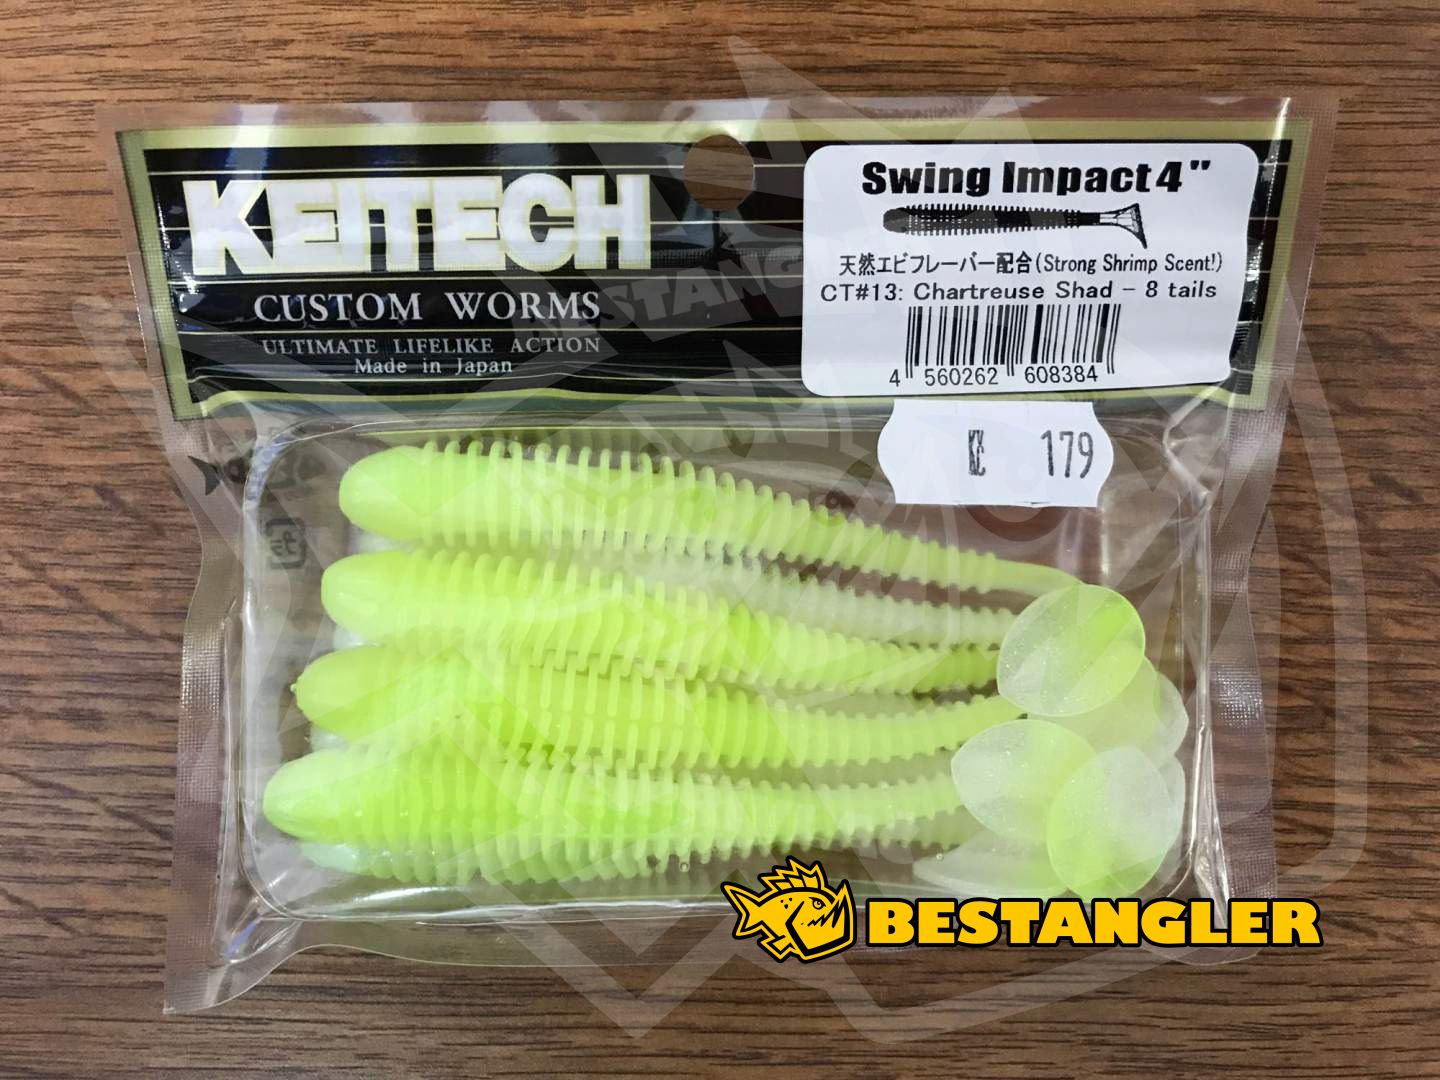 Keitech Swing Impact 4” soft baits 